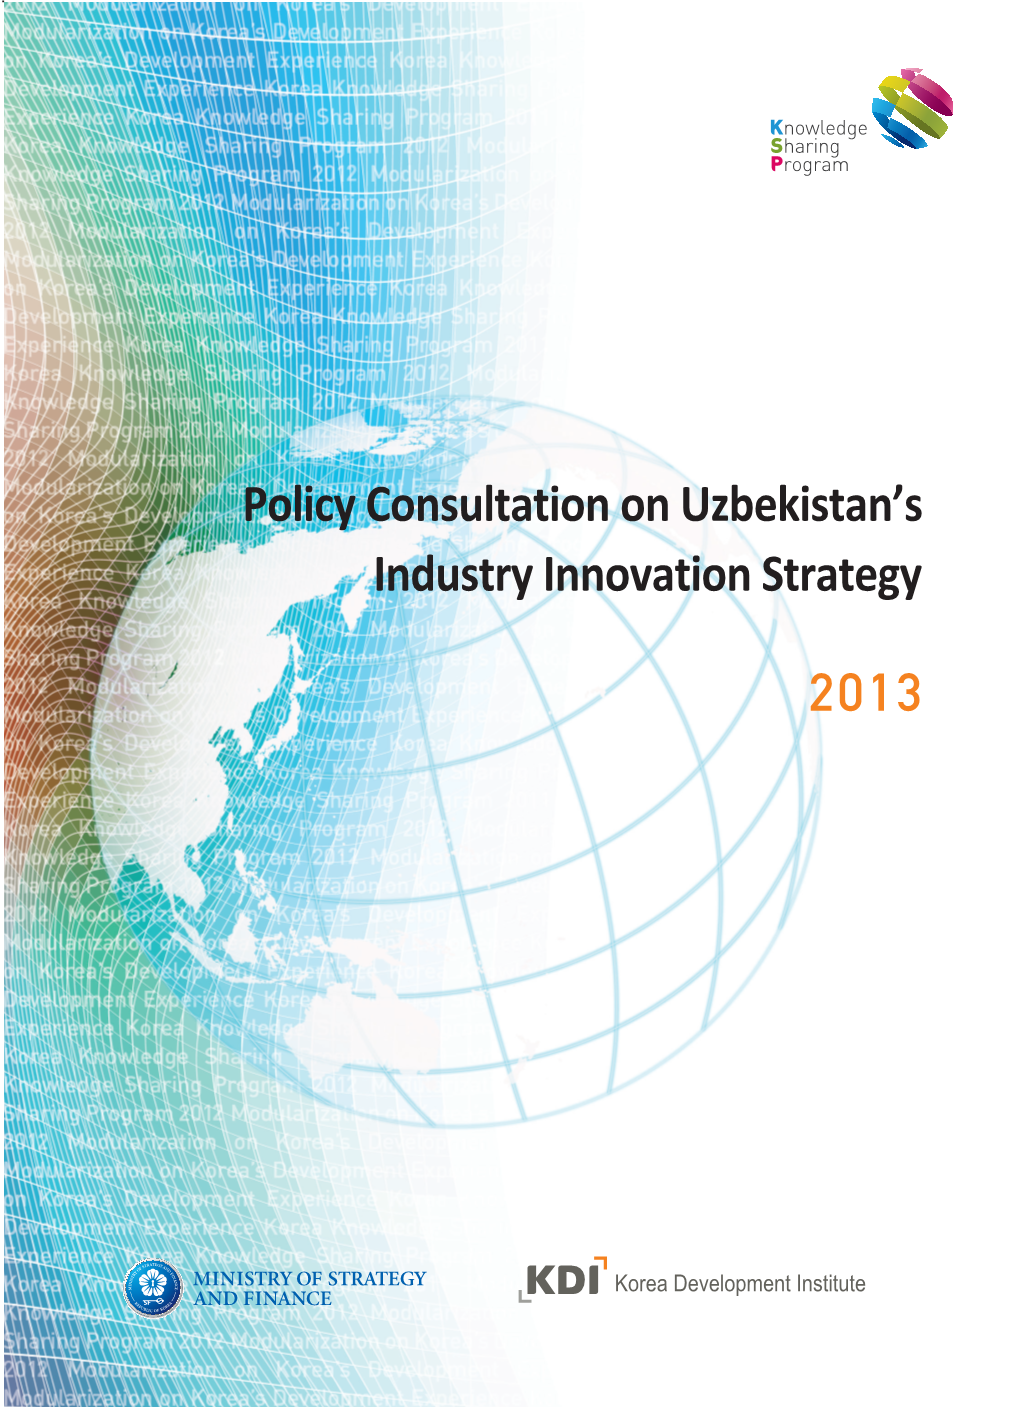 Policy Consultation on Uzbekistan's Industry Innovation Strategy